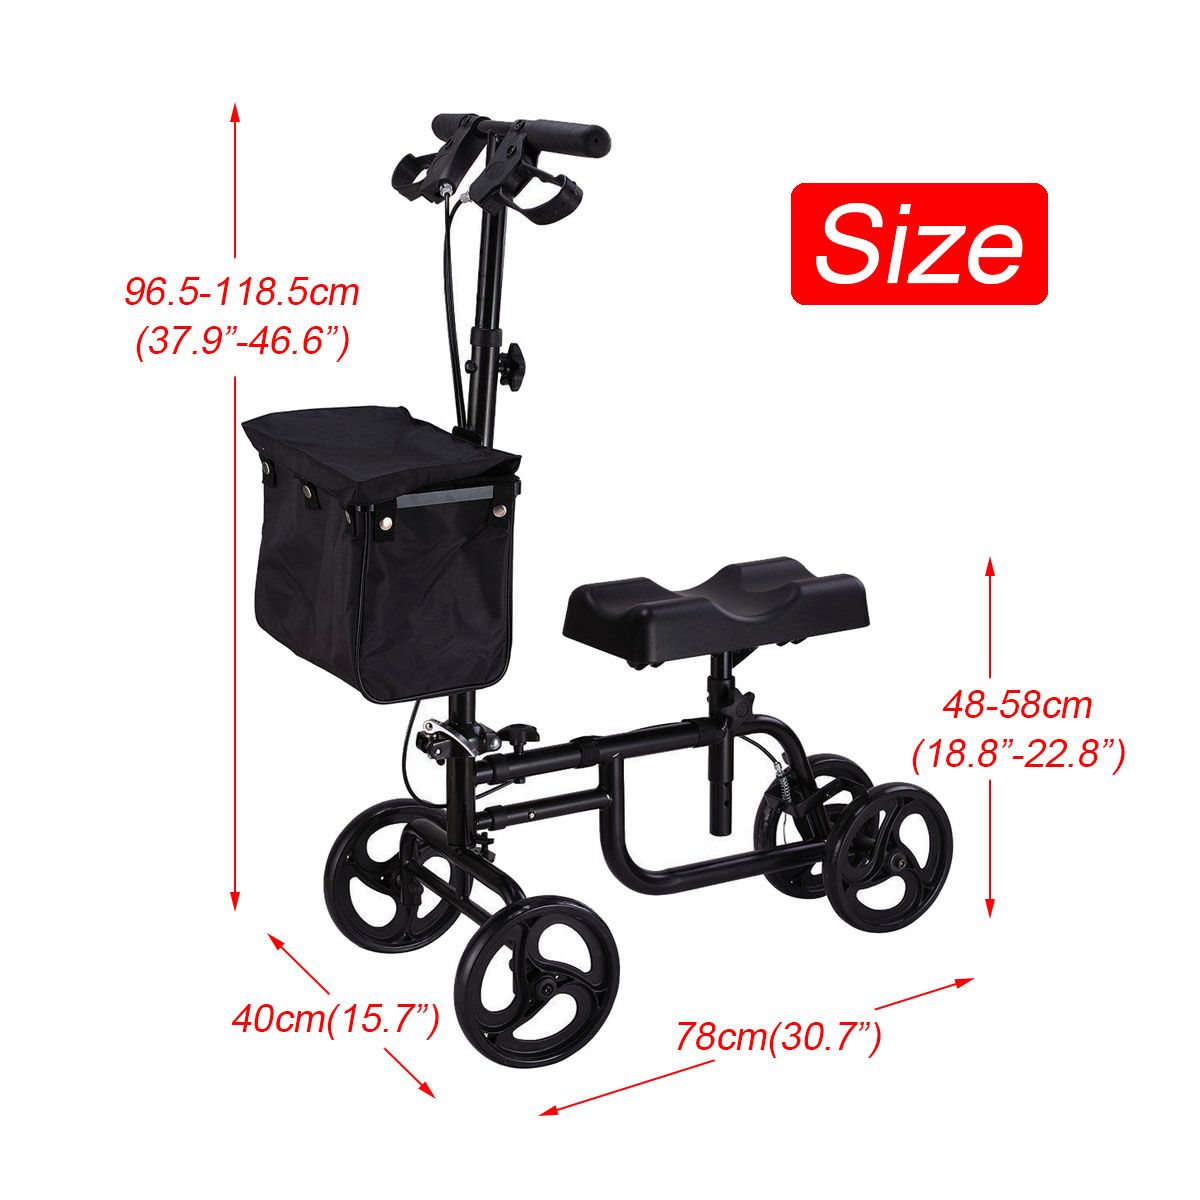 Mobility-Knee-Walker-Scooter-Roller-Crutch-Leg-Steerable-Foldable-Black-1749047